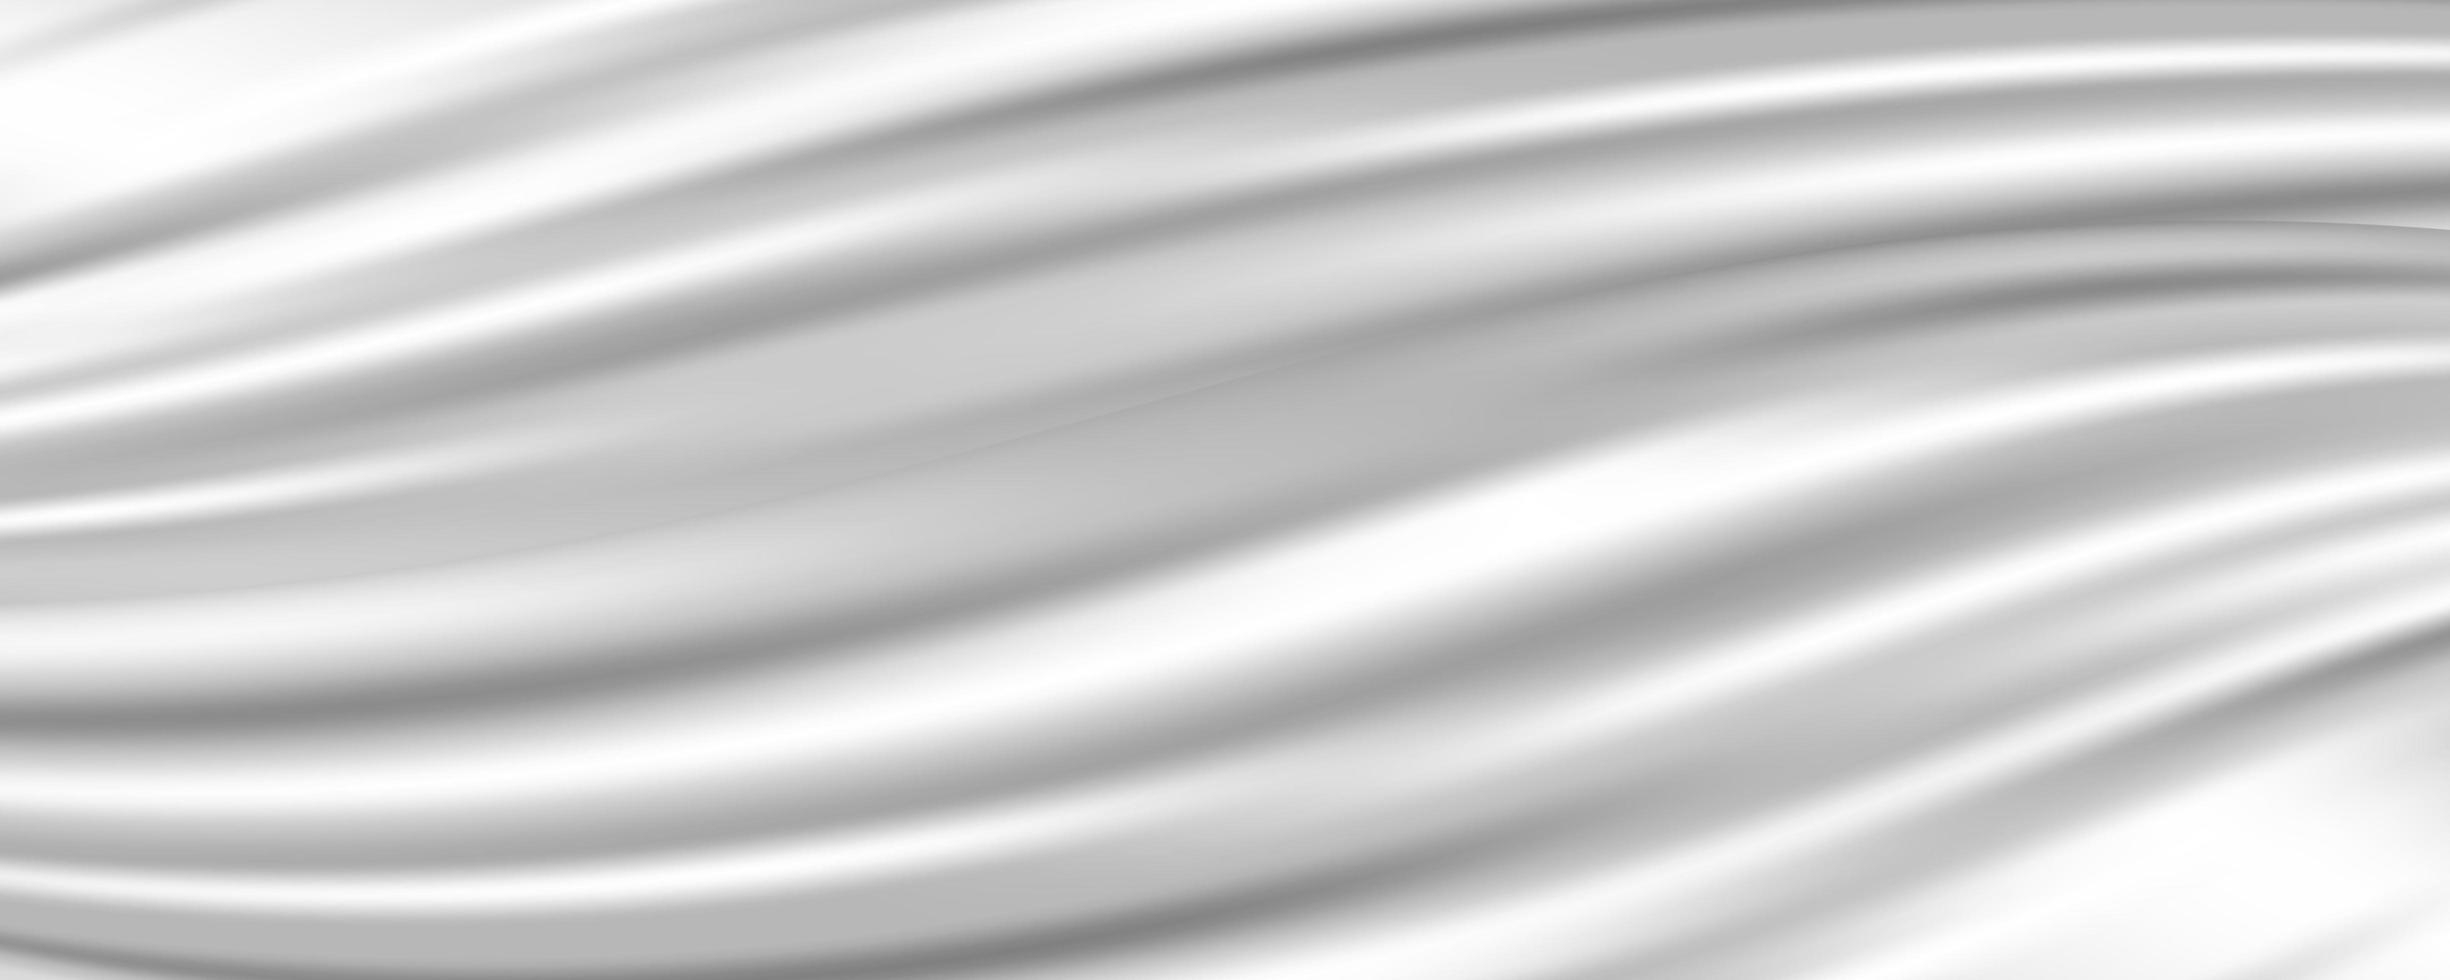 Textura de seda de tela blanca abstracta. ondas de leche para el fondo vector